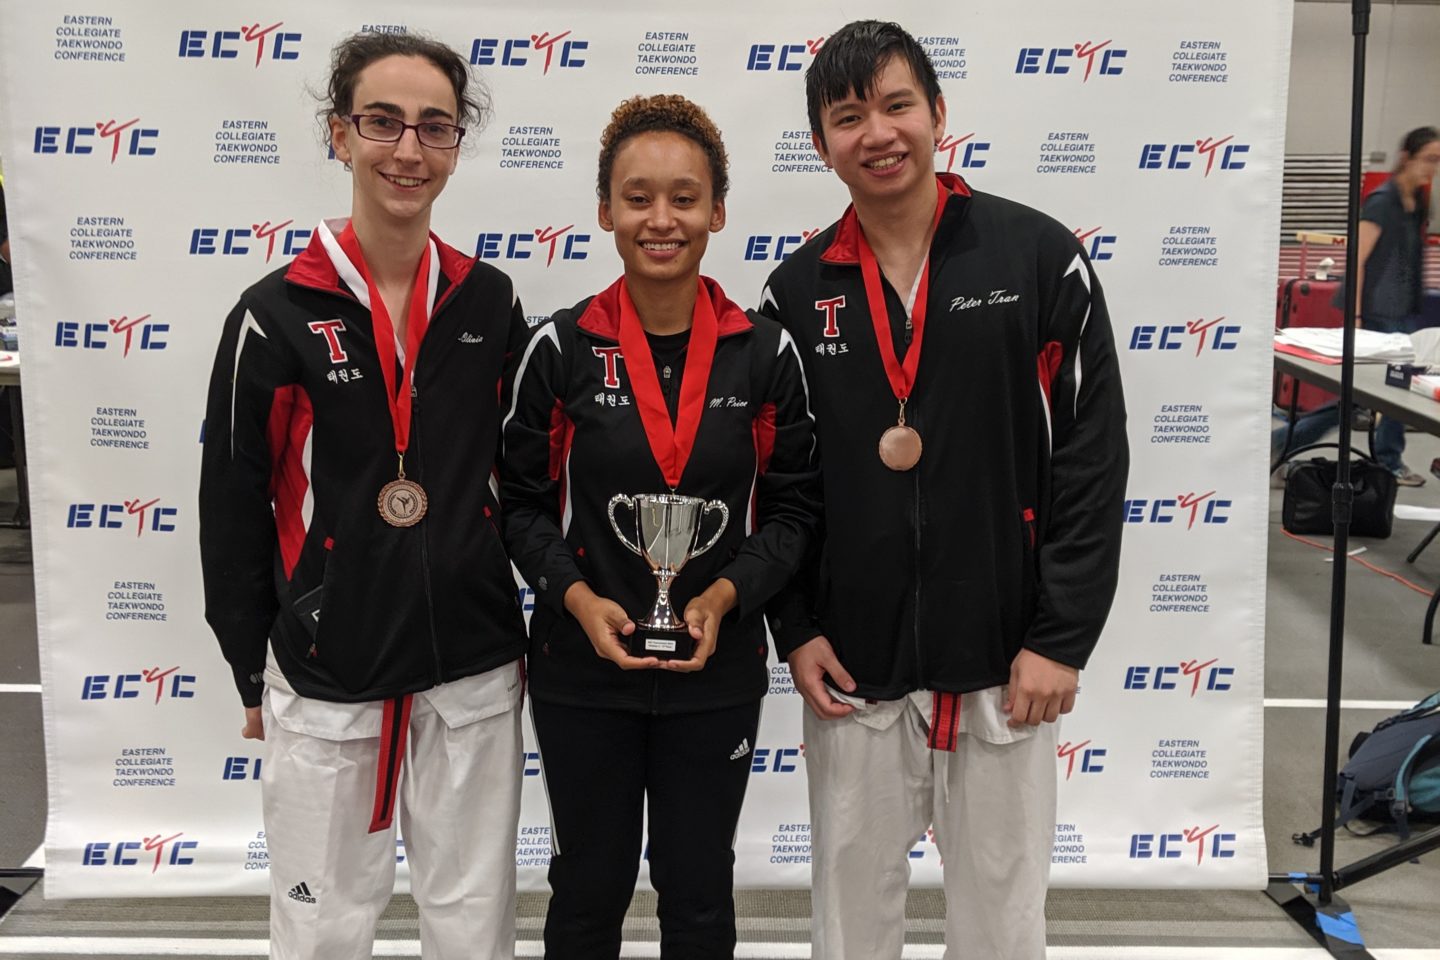 MIT sport taekwondo captains holding trophy at tournament